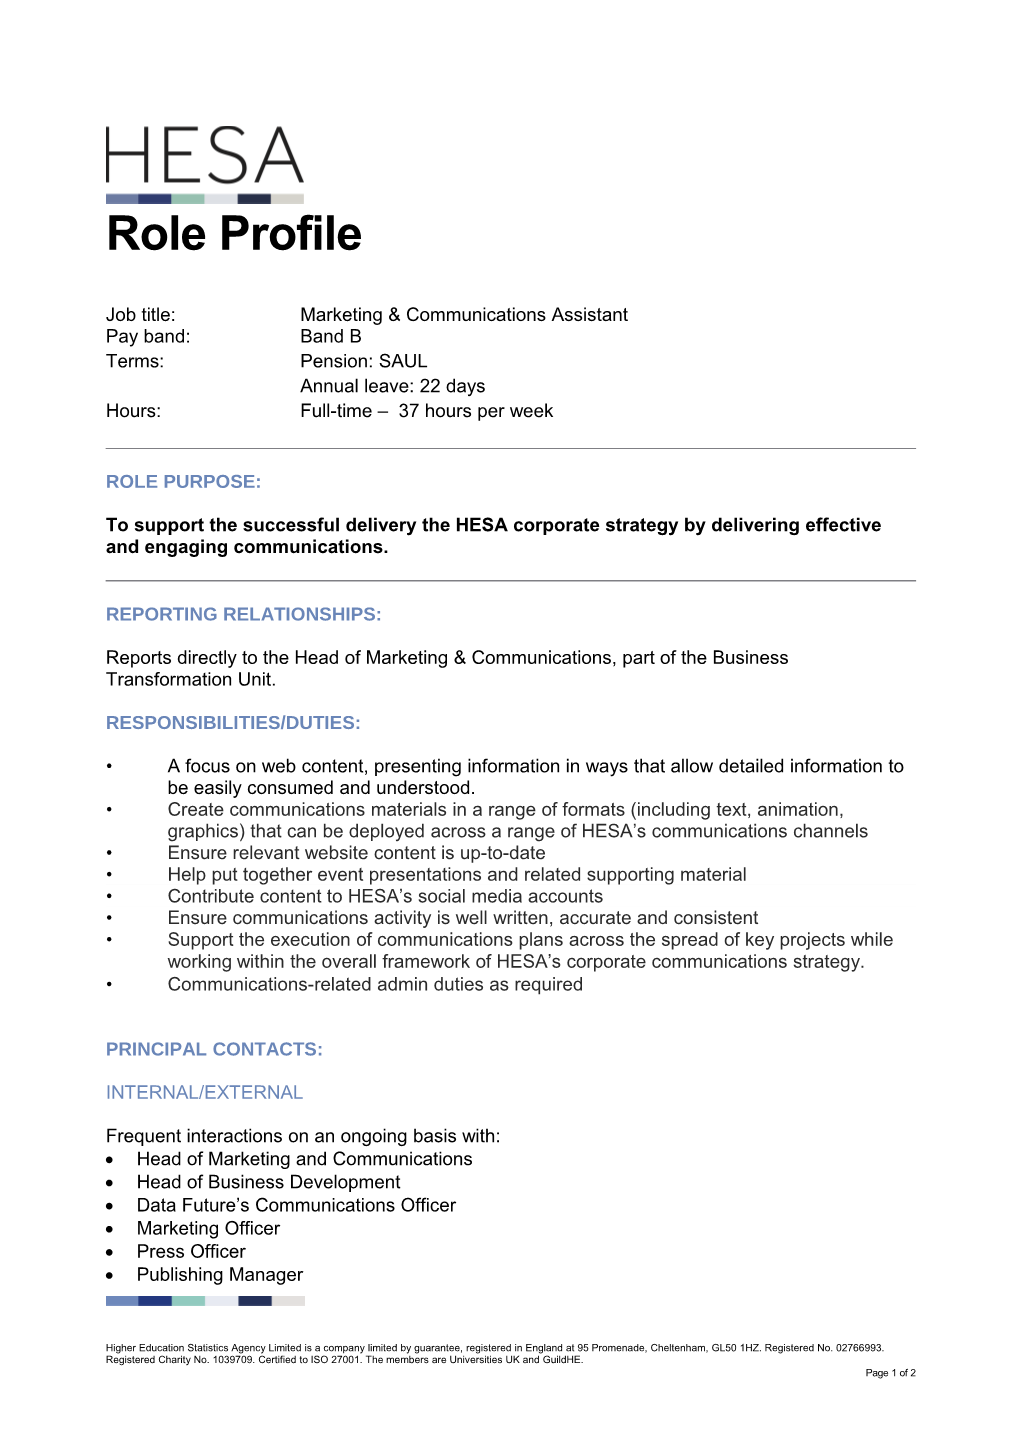 Job Title:Marketing & Communications Assistant